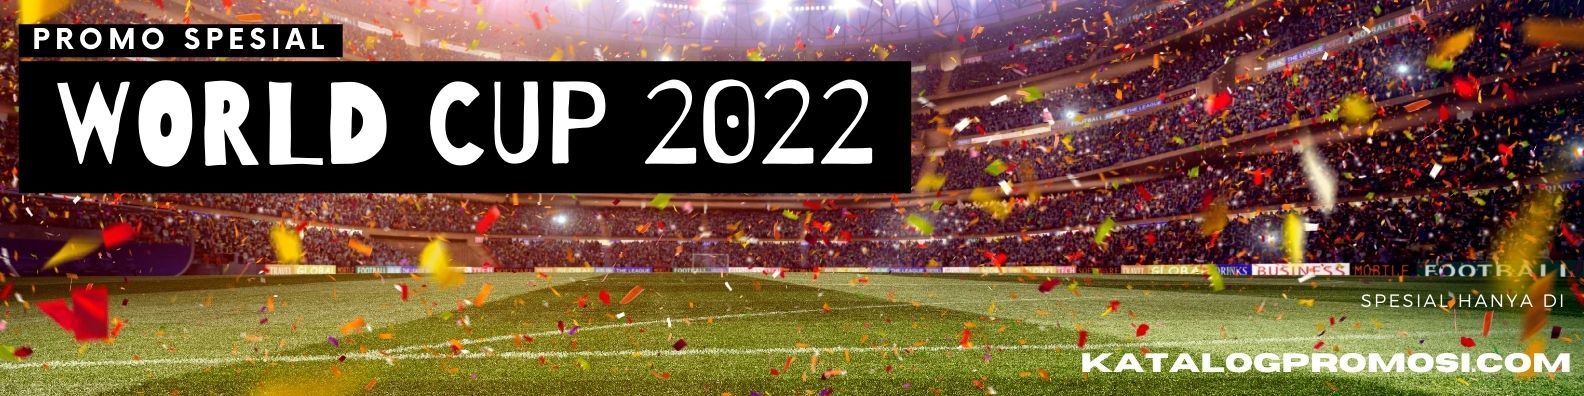 Promo World Cup 2022